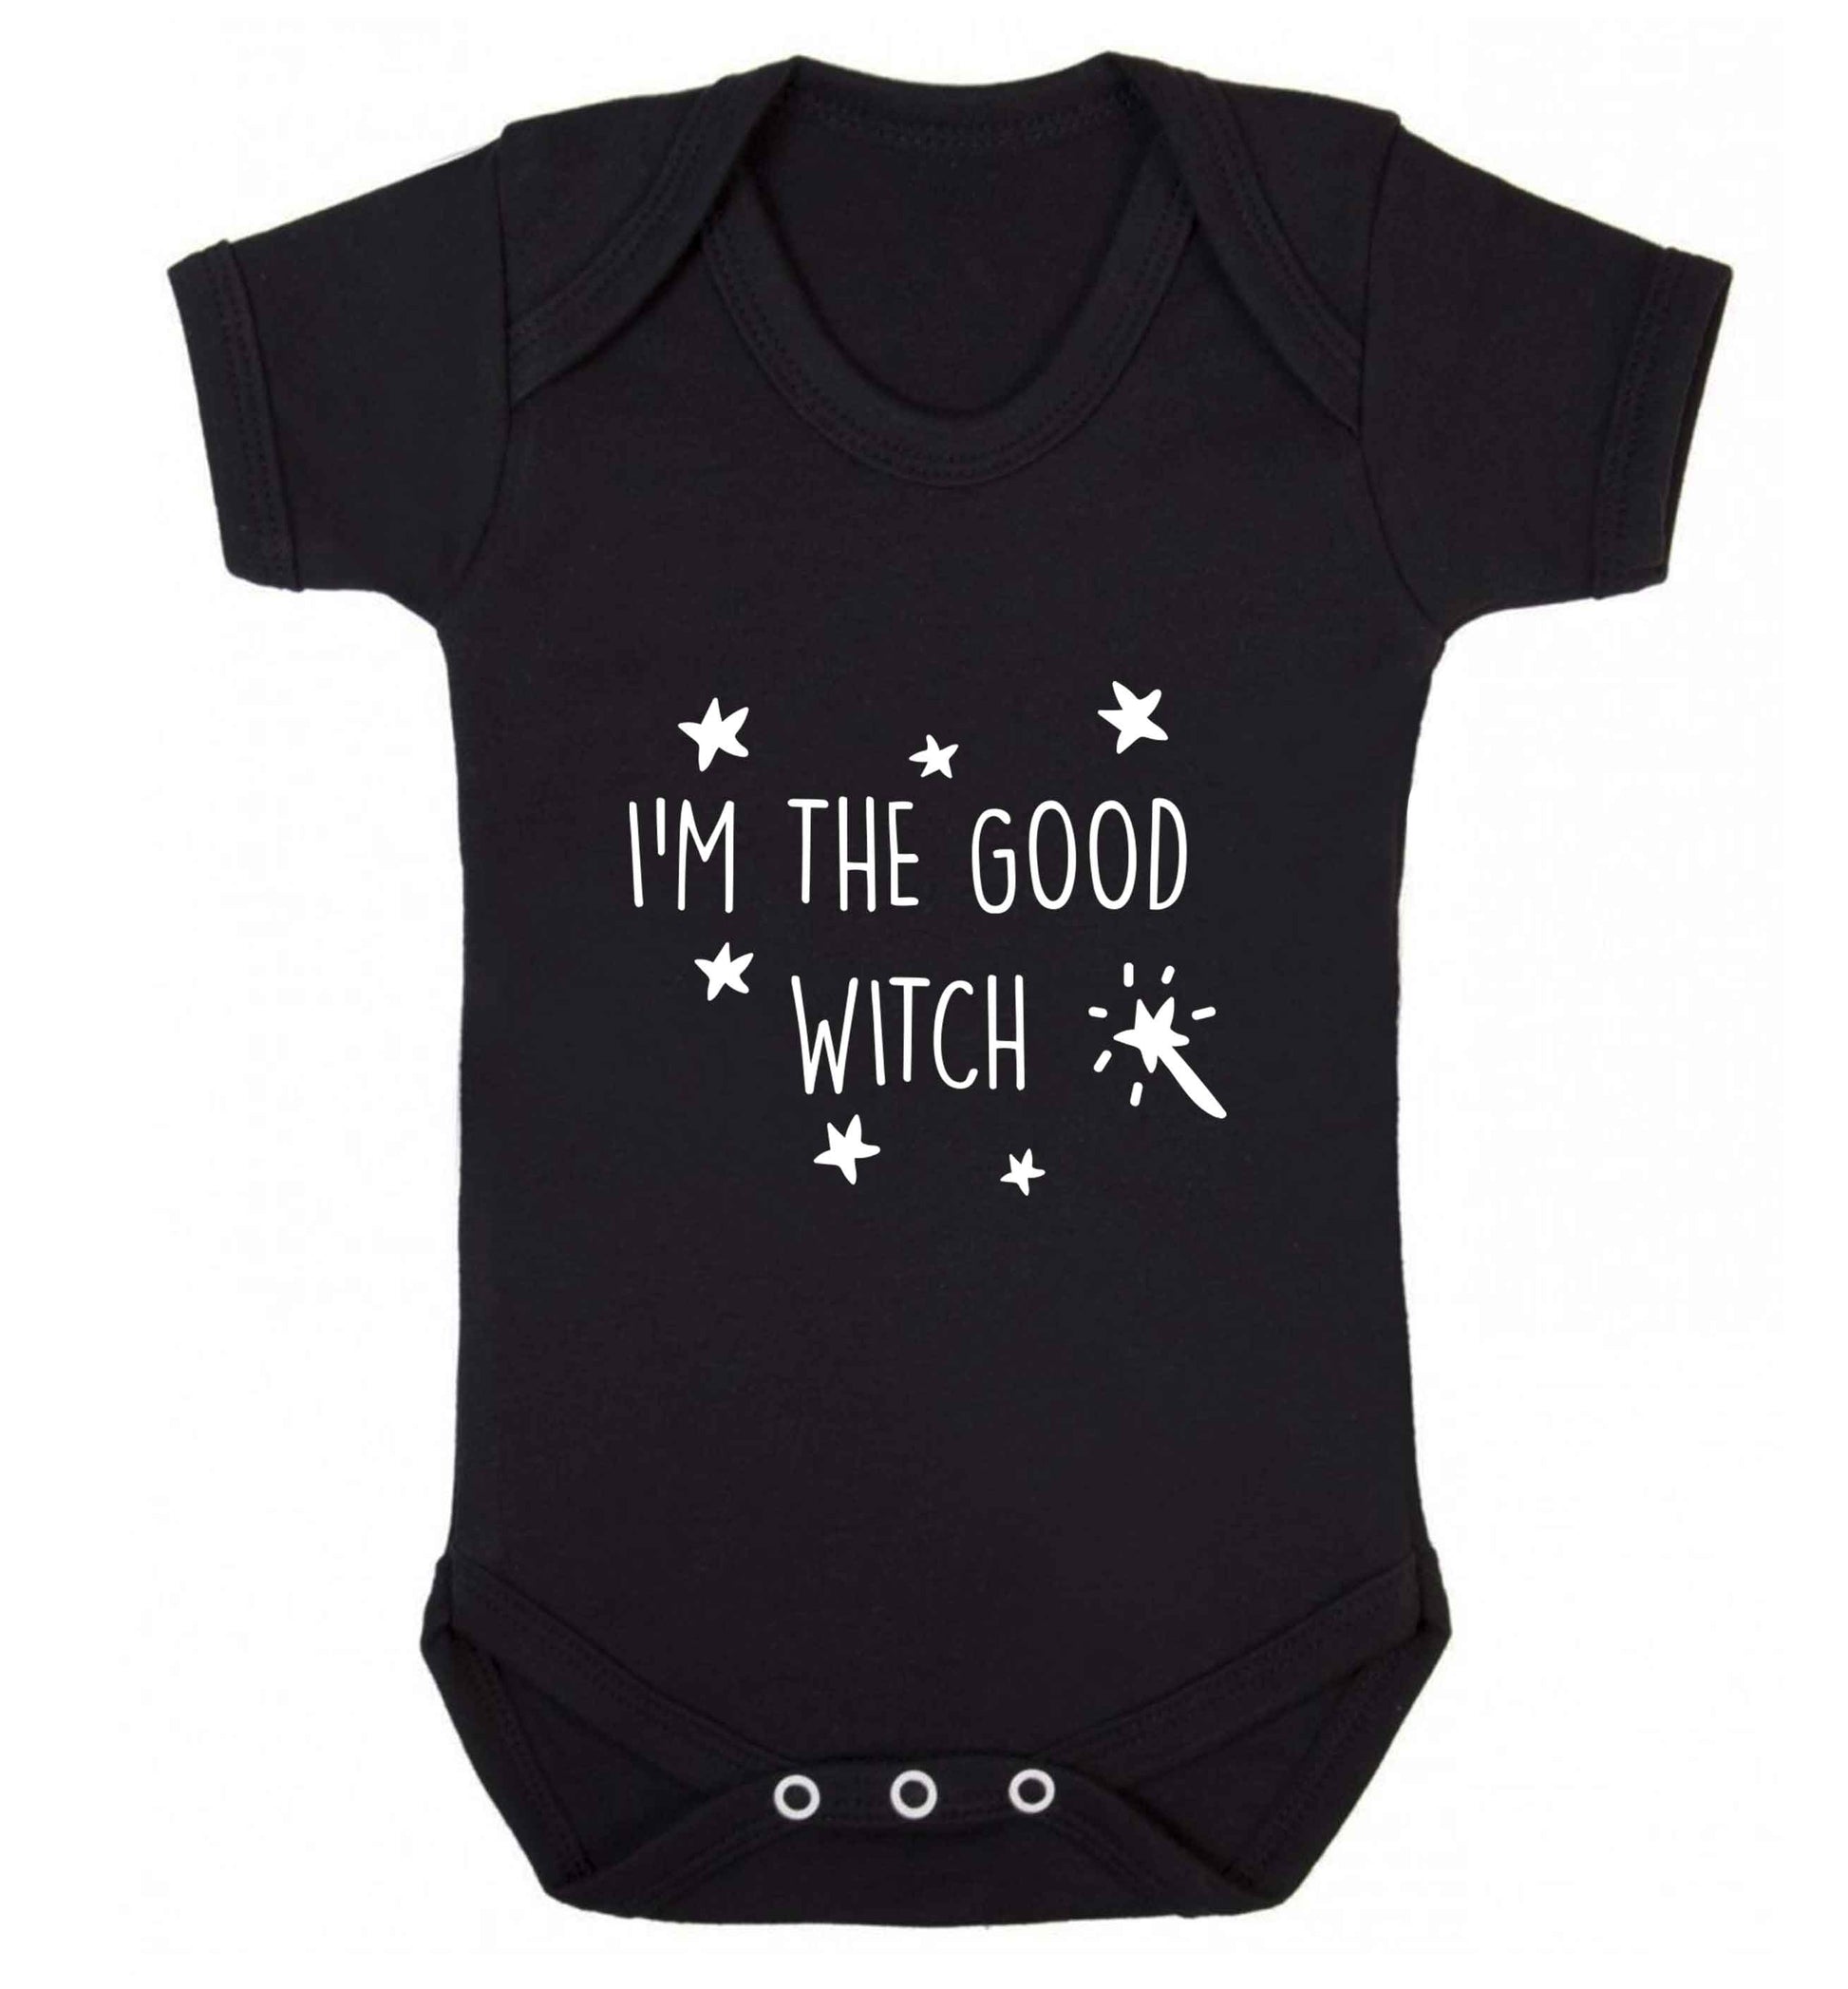 Good witch baby vest black 18-24 months